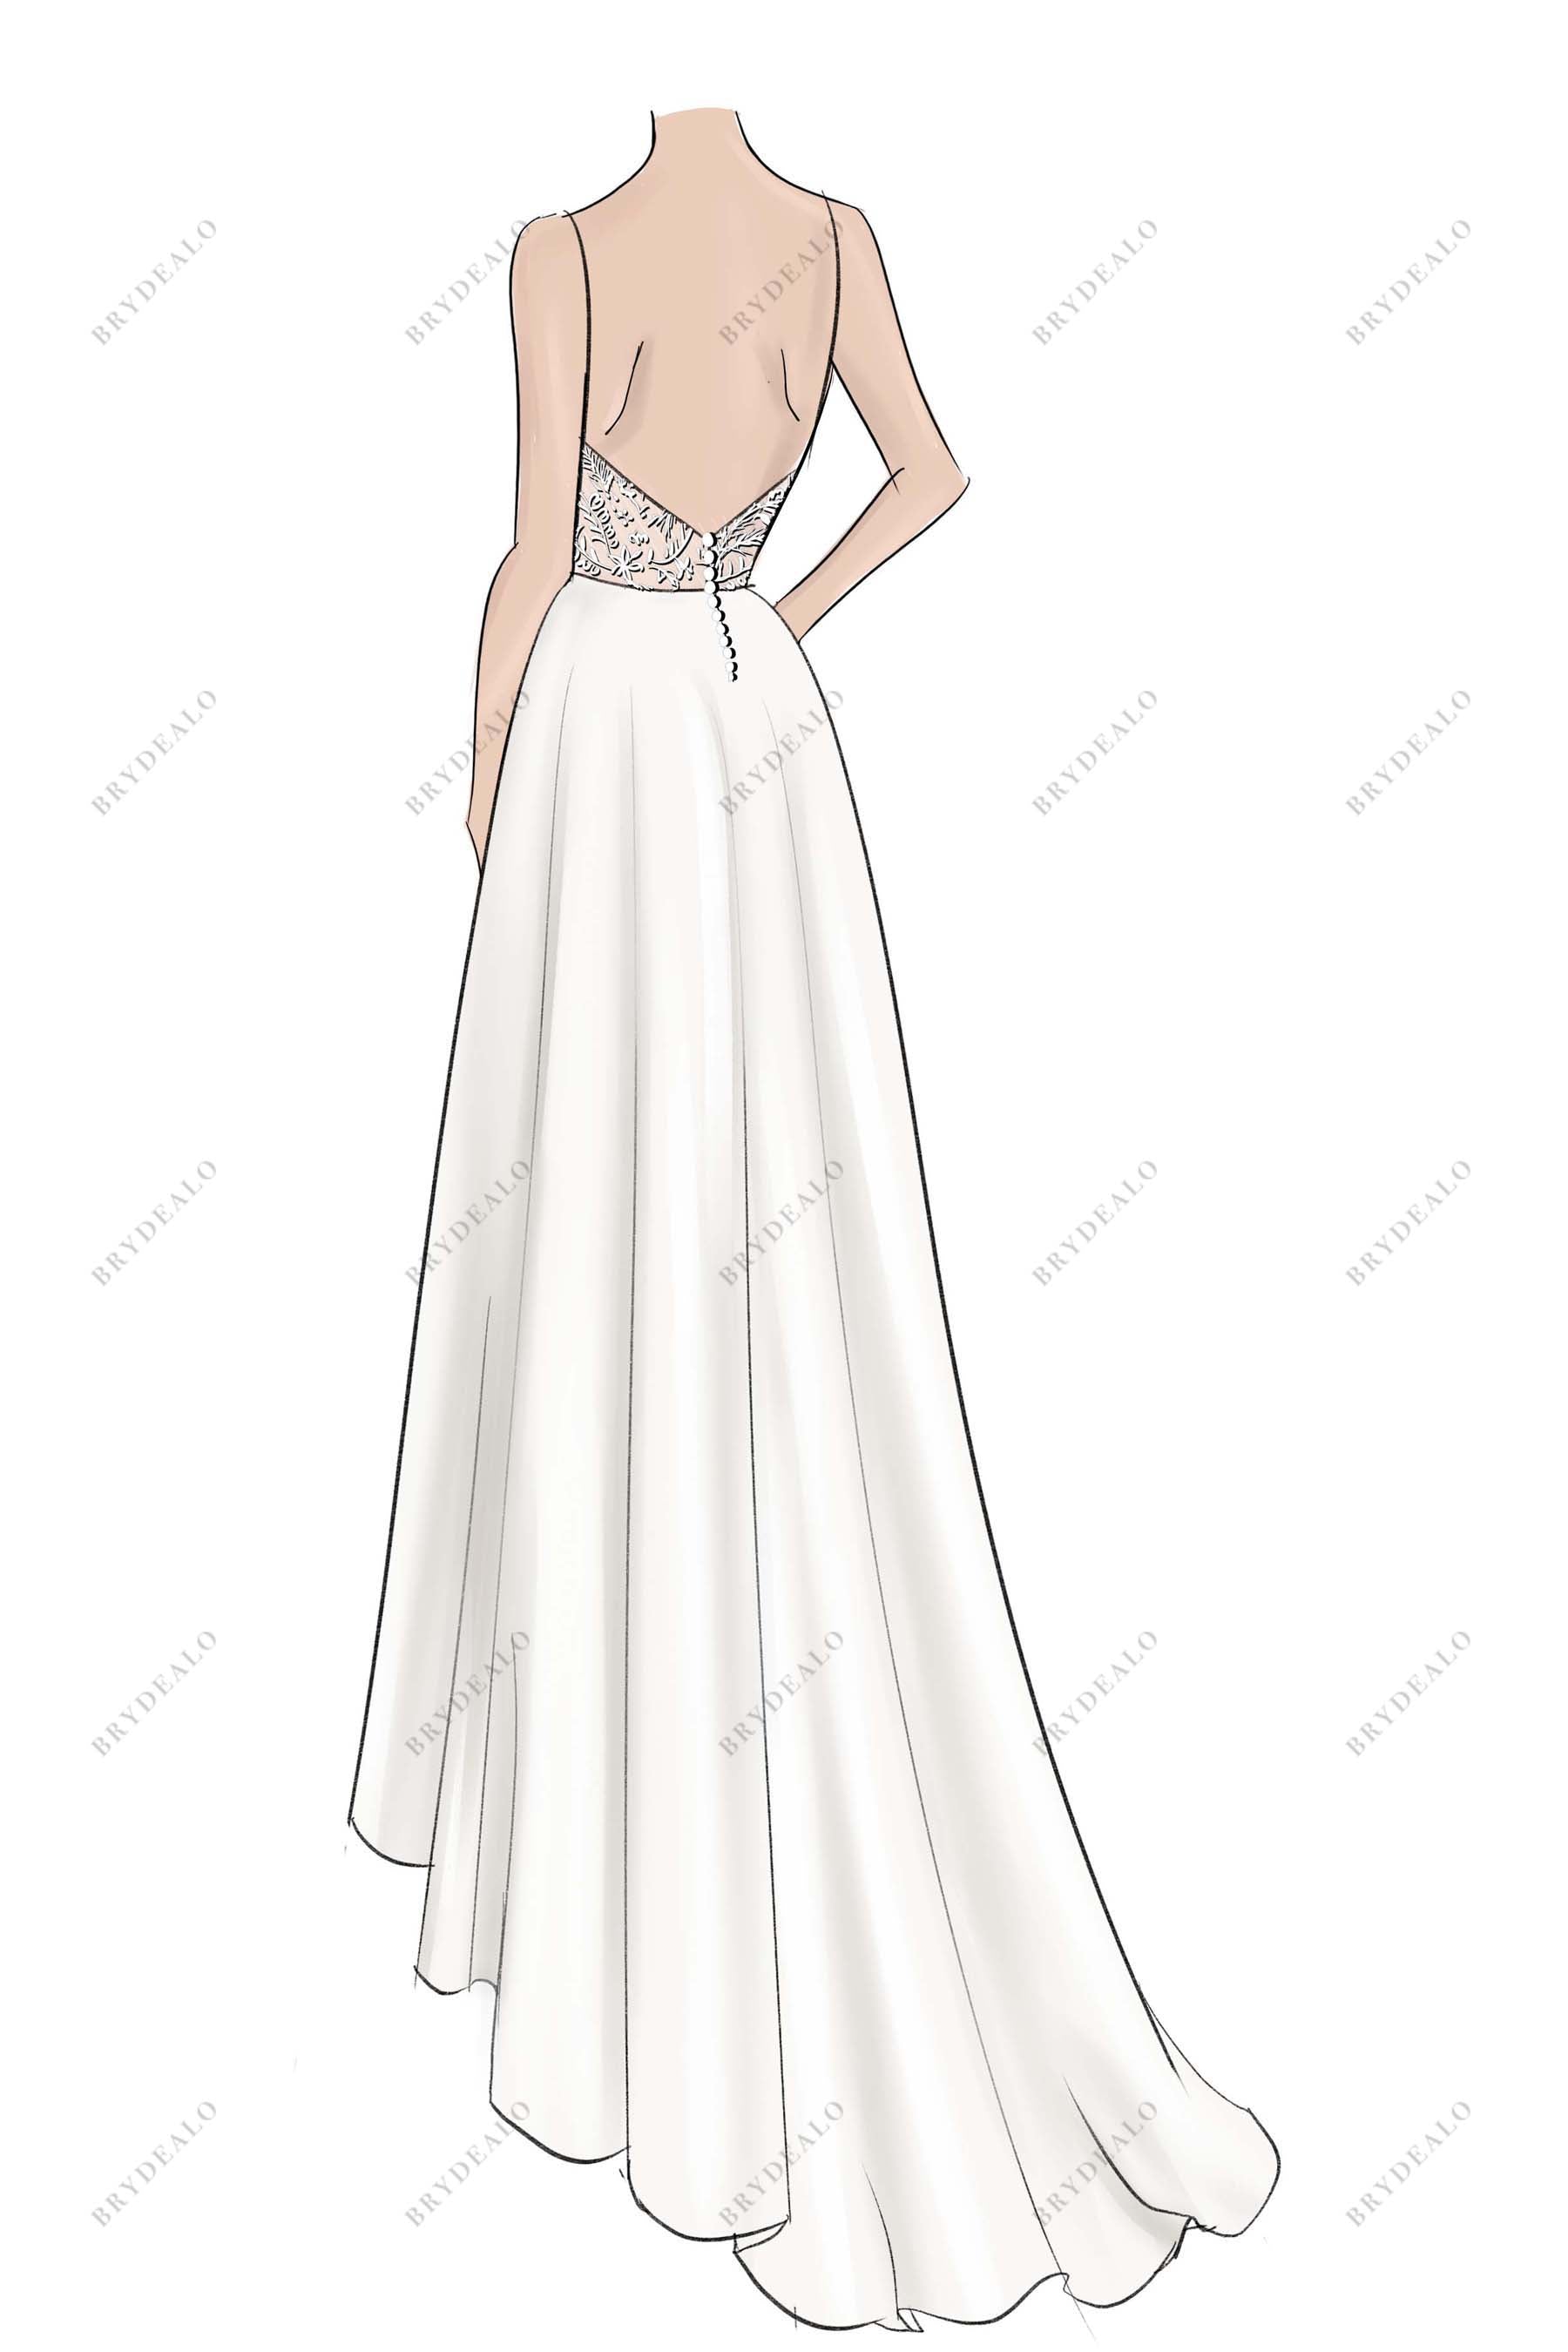 illusion lace V-back custom A-line bridal dress sketch